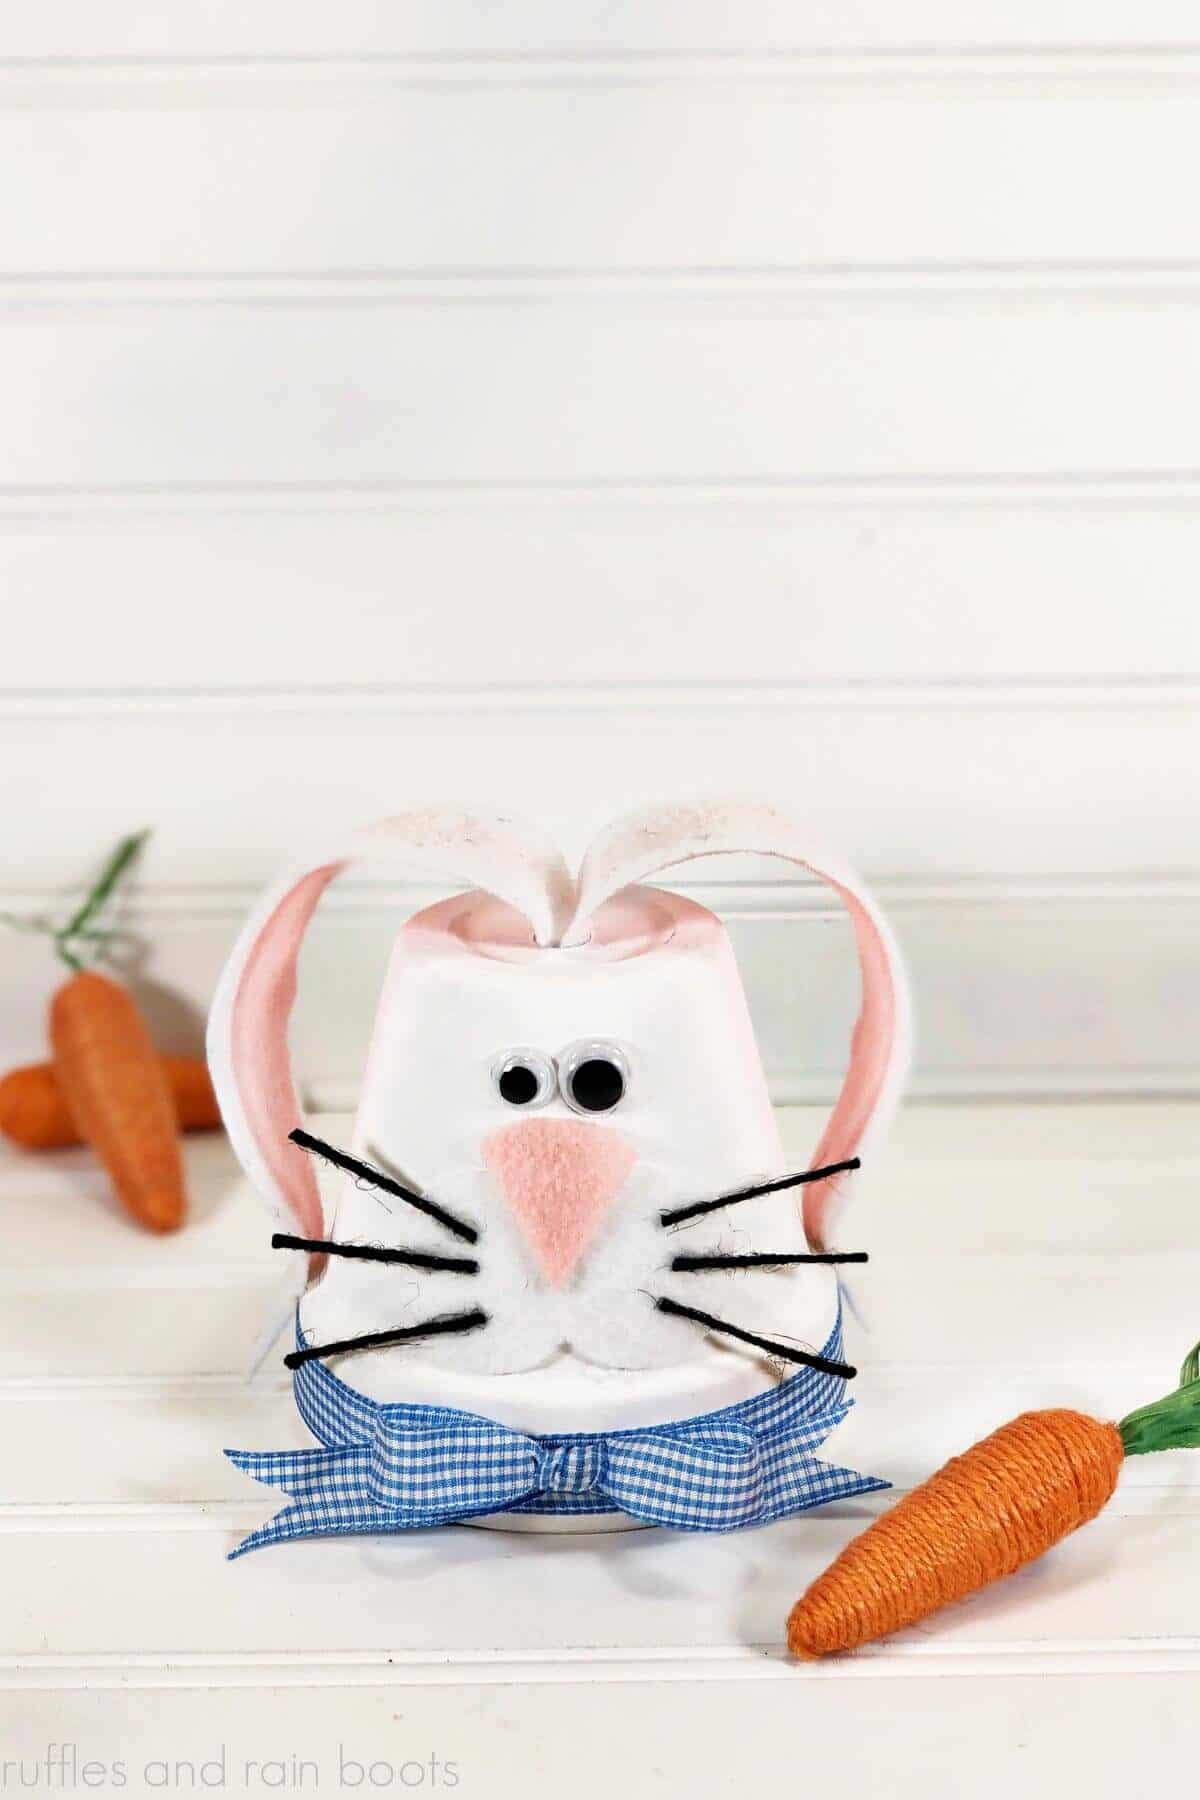 Terra Cotta Pot Bunny Craft for Kids (Too Cute) - Ruffles and Rain Boots